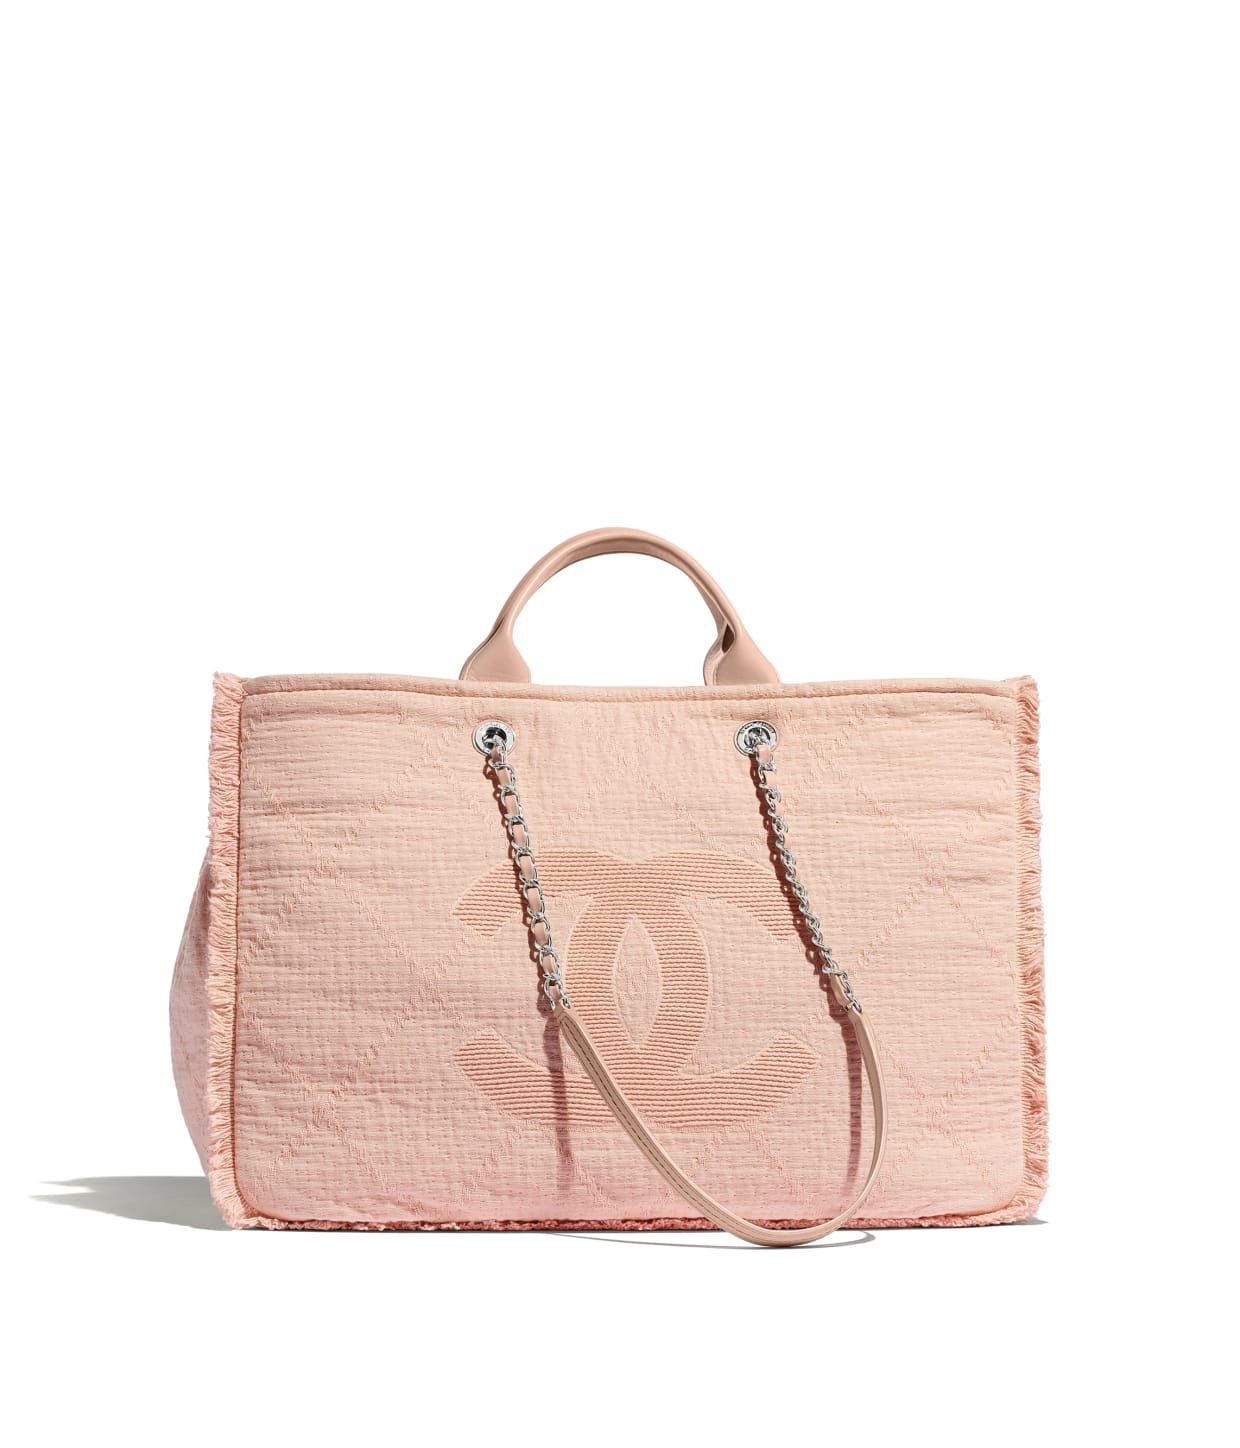 Mixed Fibers, Goatskin, Silver-Tone Metal Light Pink Large Shopping Bag | CHANEL | Chanel, Inc. (US)